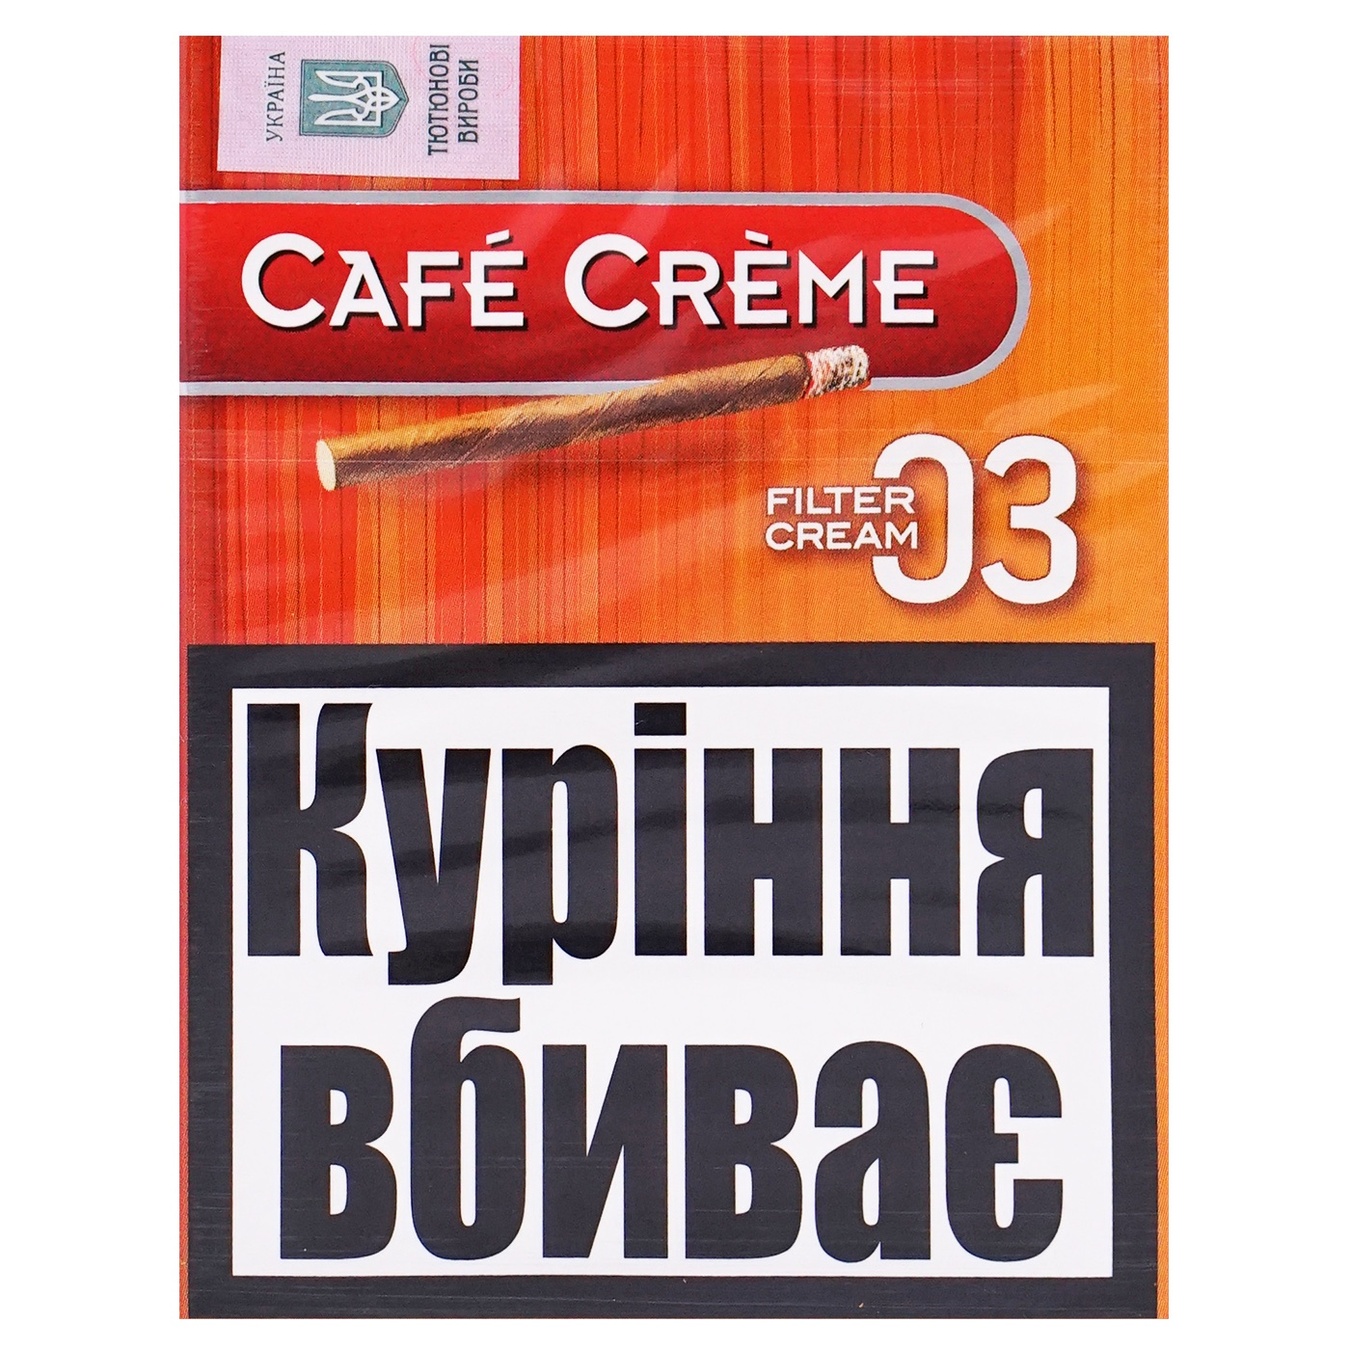 Сигари Cafe Creme filtre 03 cream 8шт (ціна вказана без акцизу)